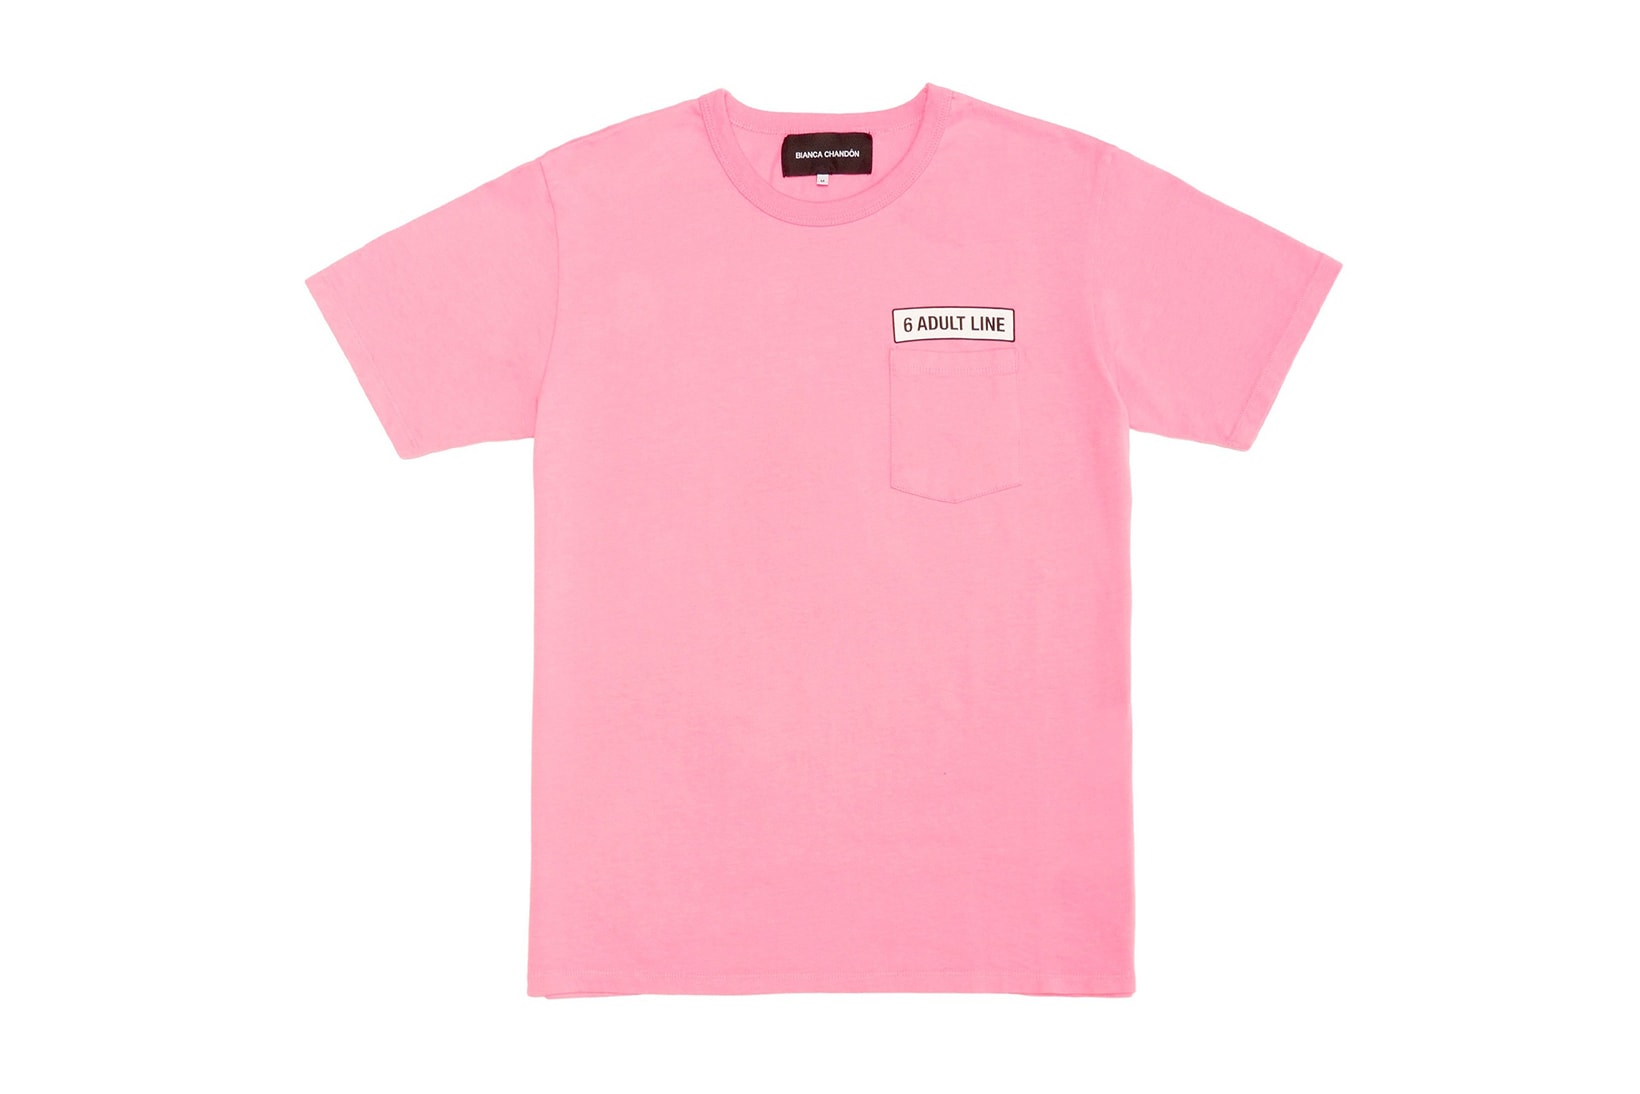 Bianca Chandôn Tom Bianchi Pride Dover Street Market T Shirt Pink